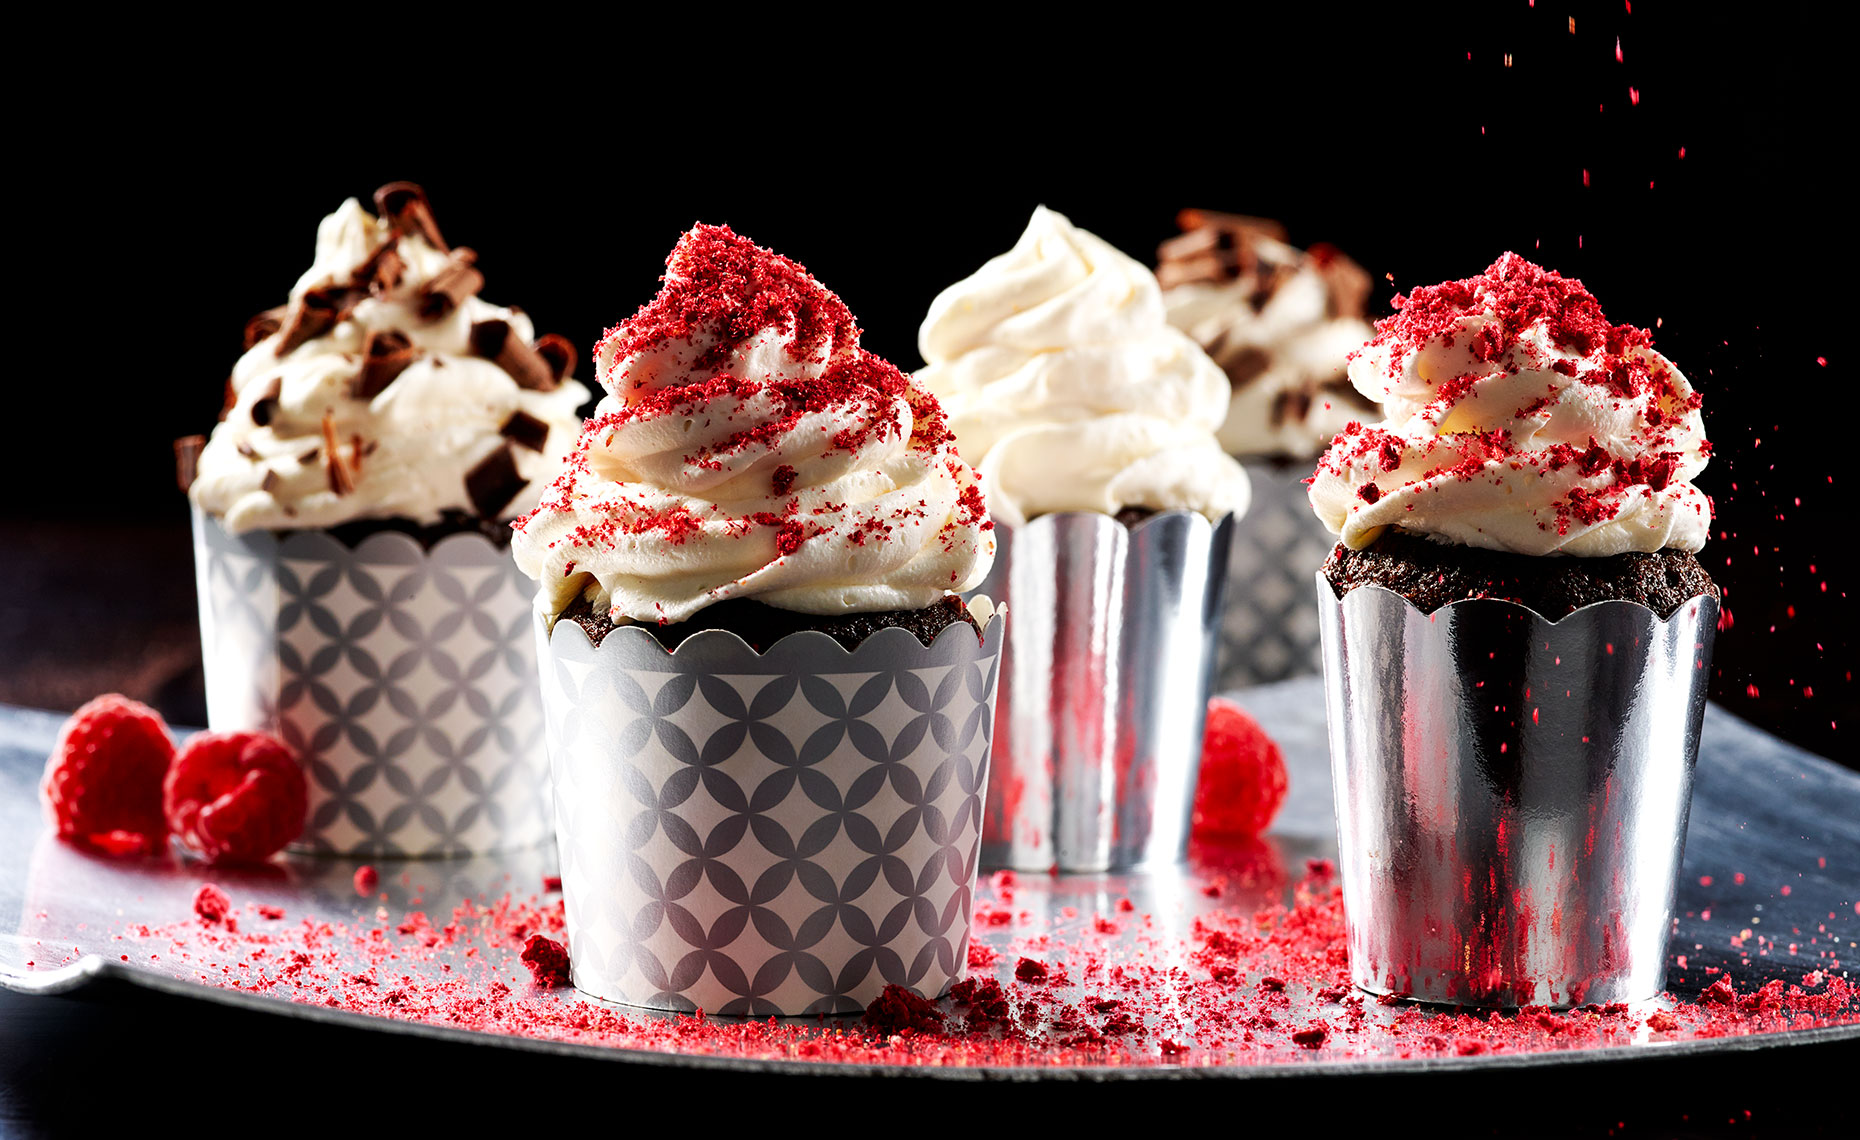 Variety of chocolate cupcakes with raspberry sprinkles